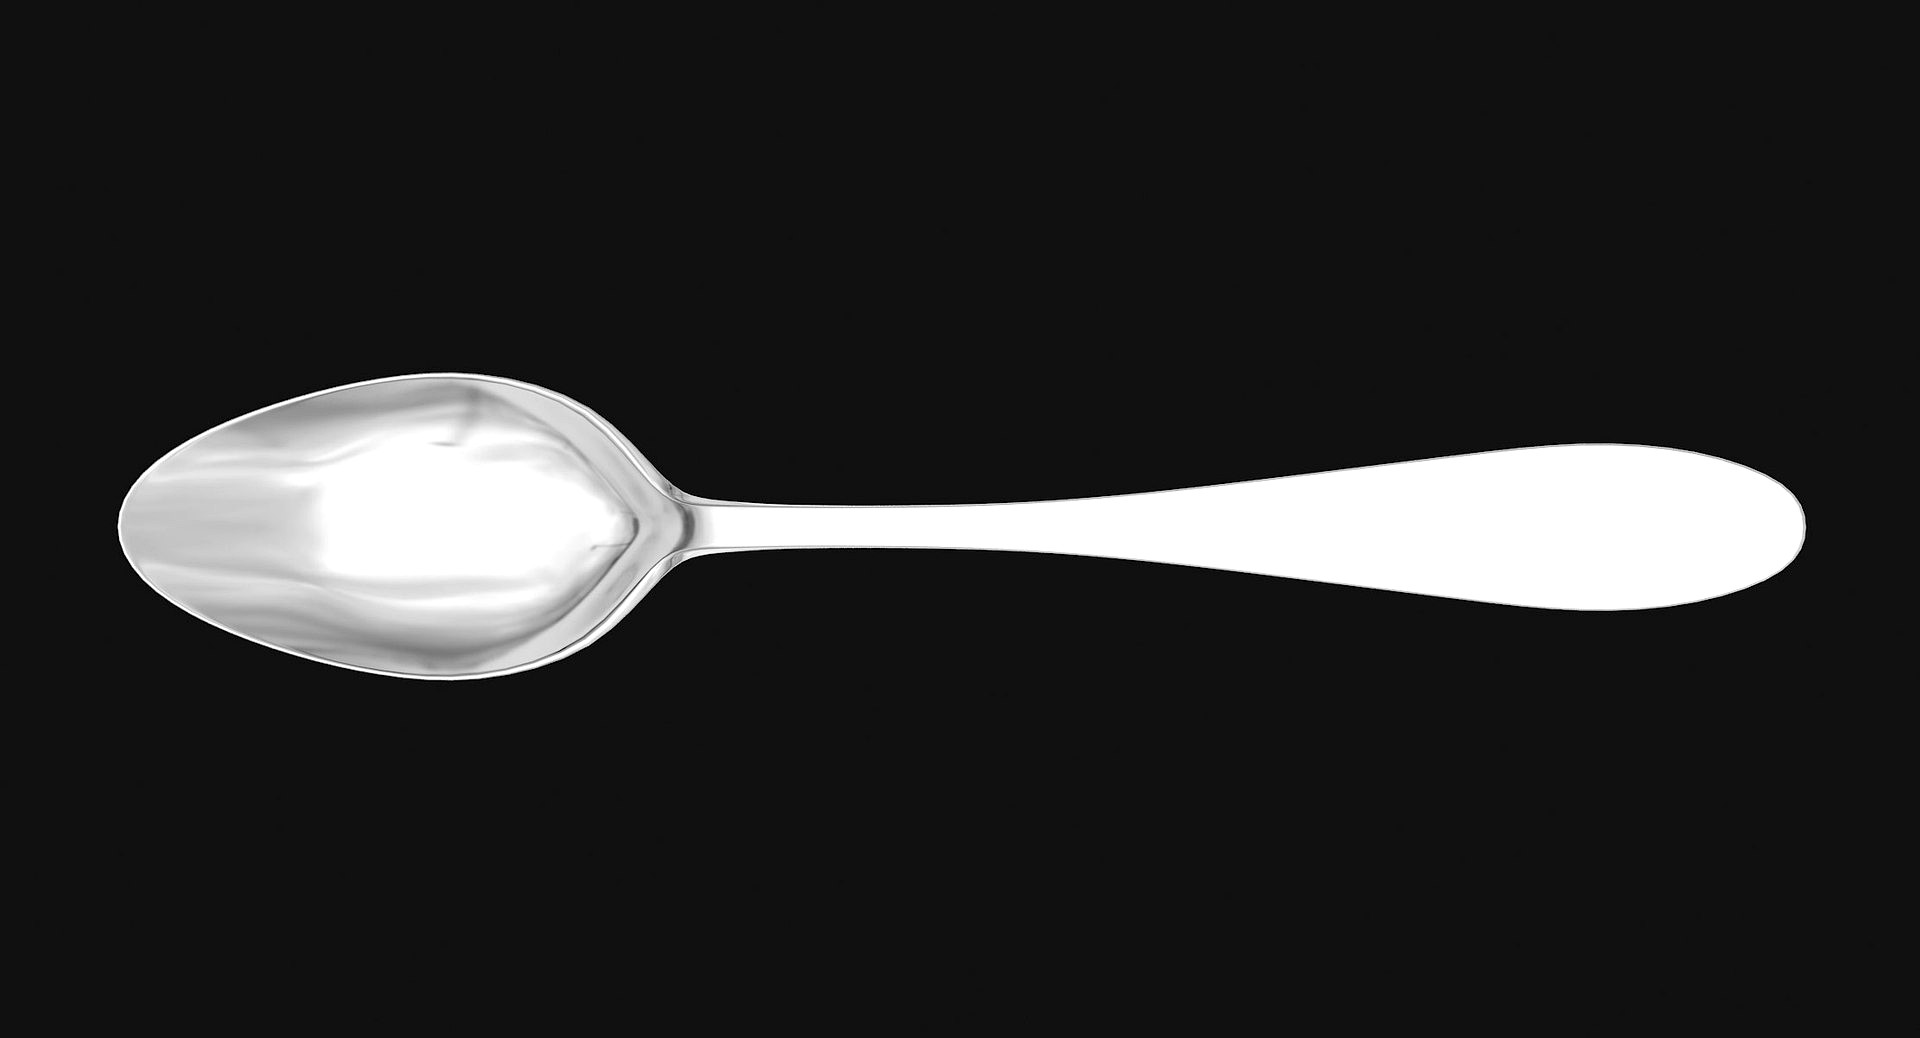 Spoon B